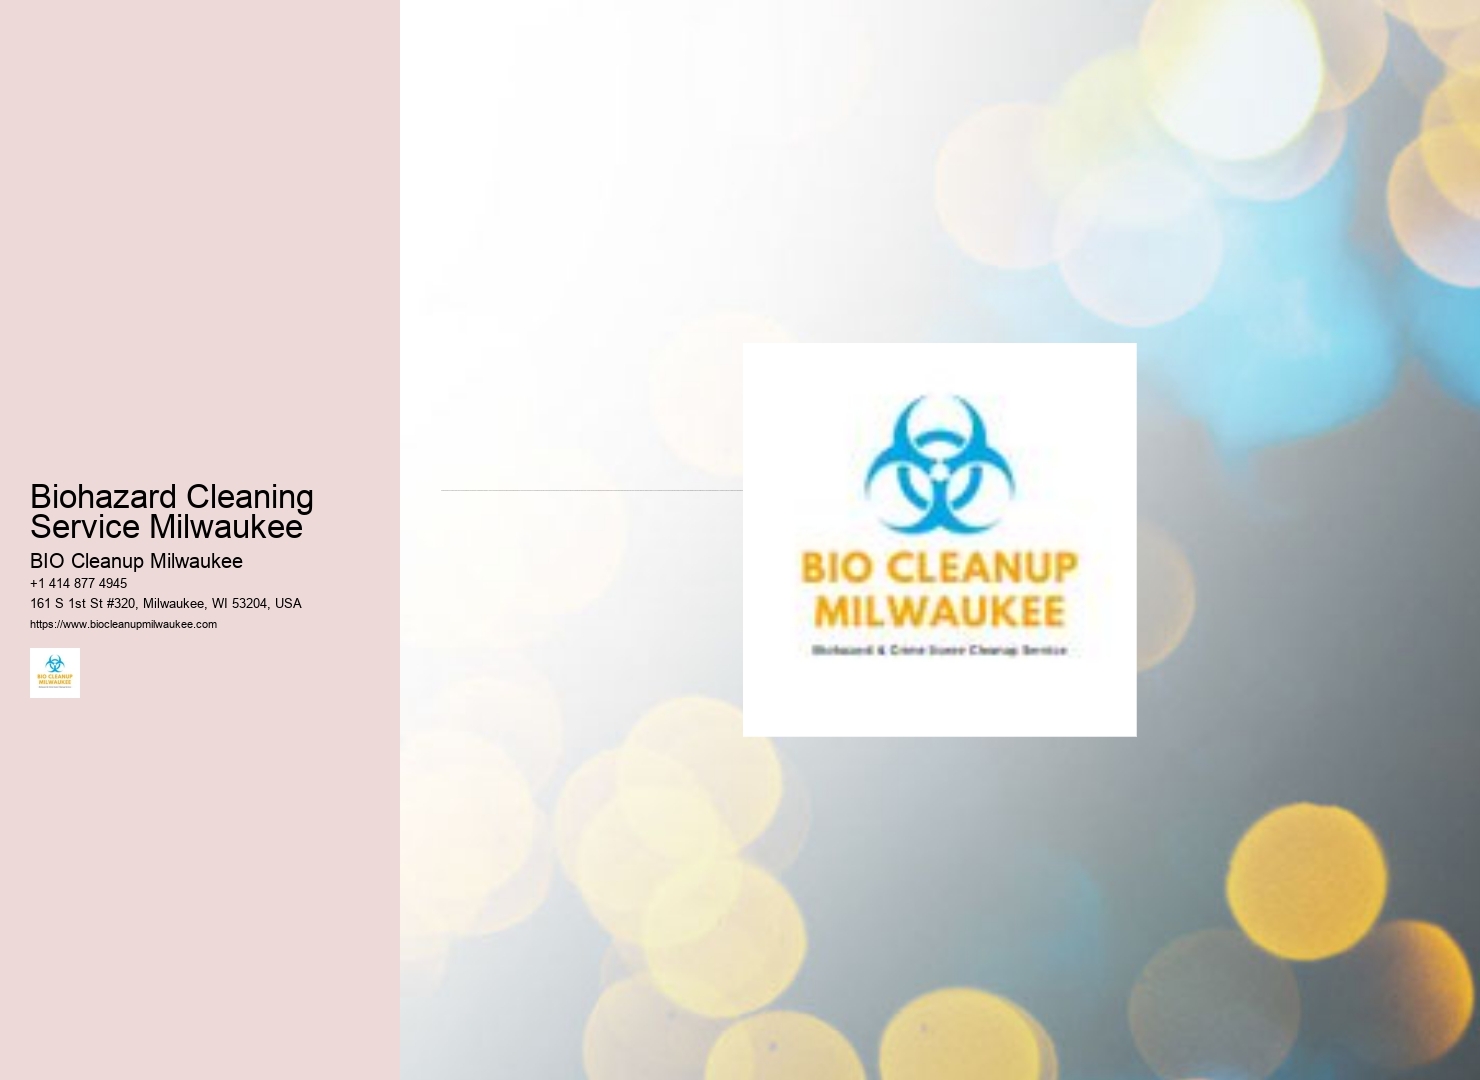 Biohazard Cleaning Service Milwaukee